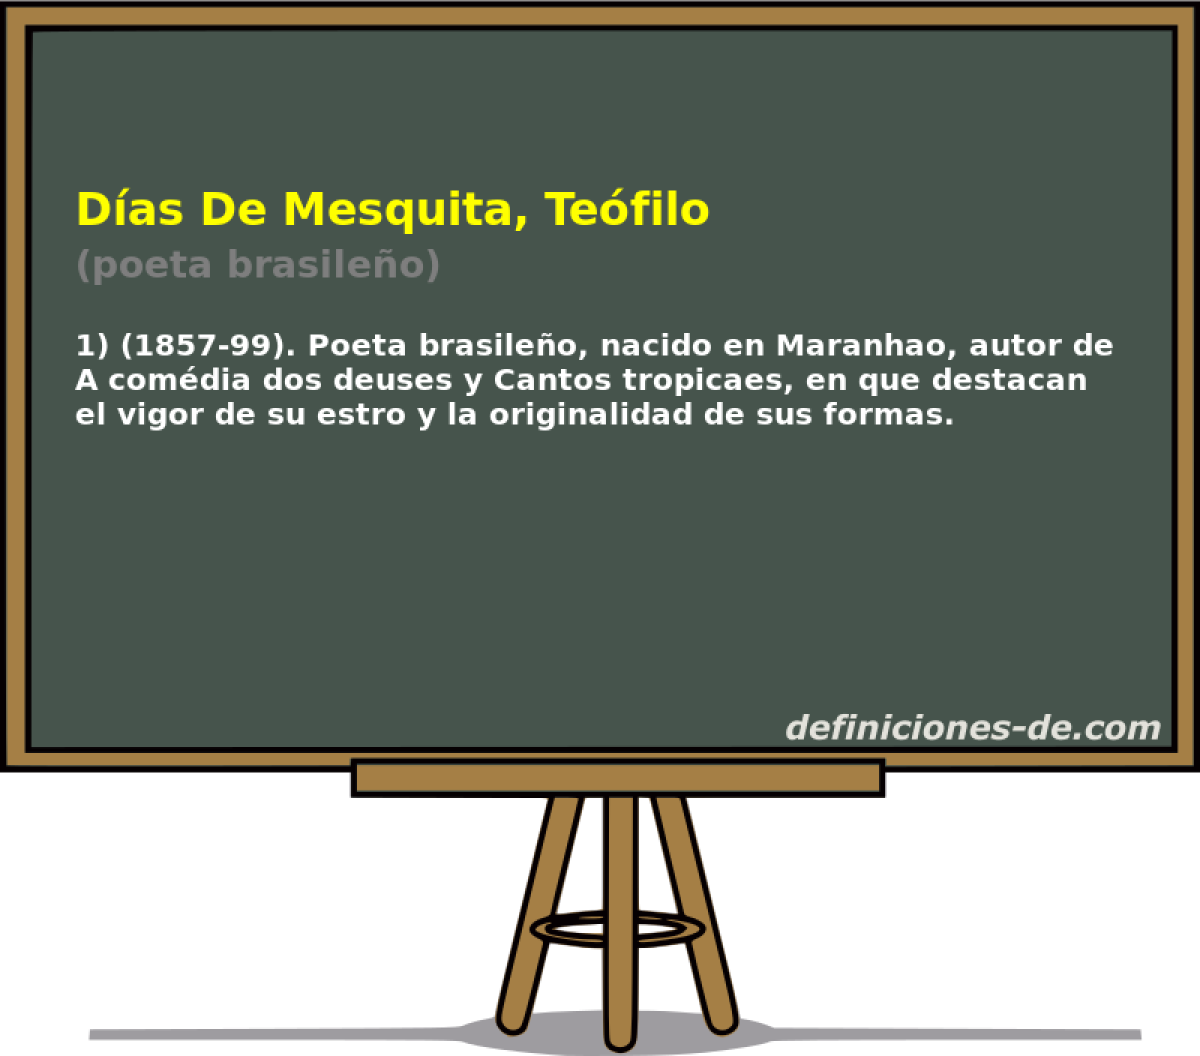 Das De Mesquita, Tefilo (poeta brasileo)